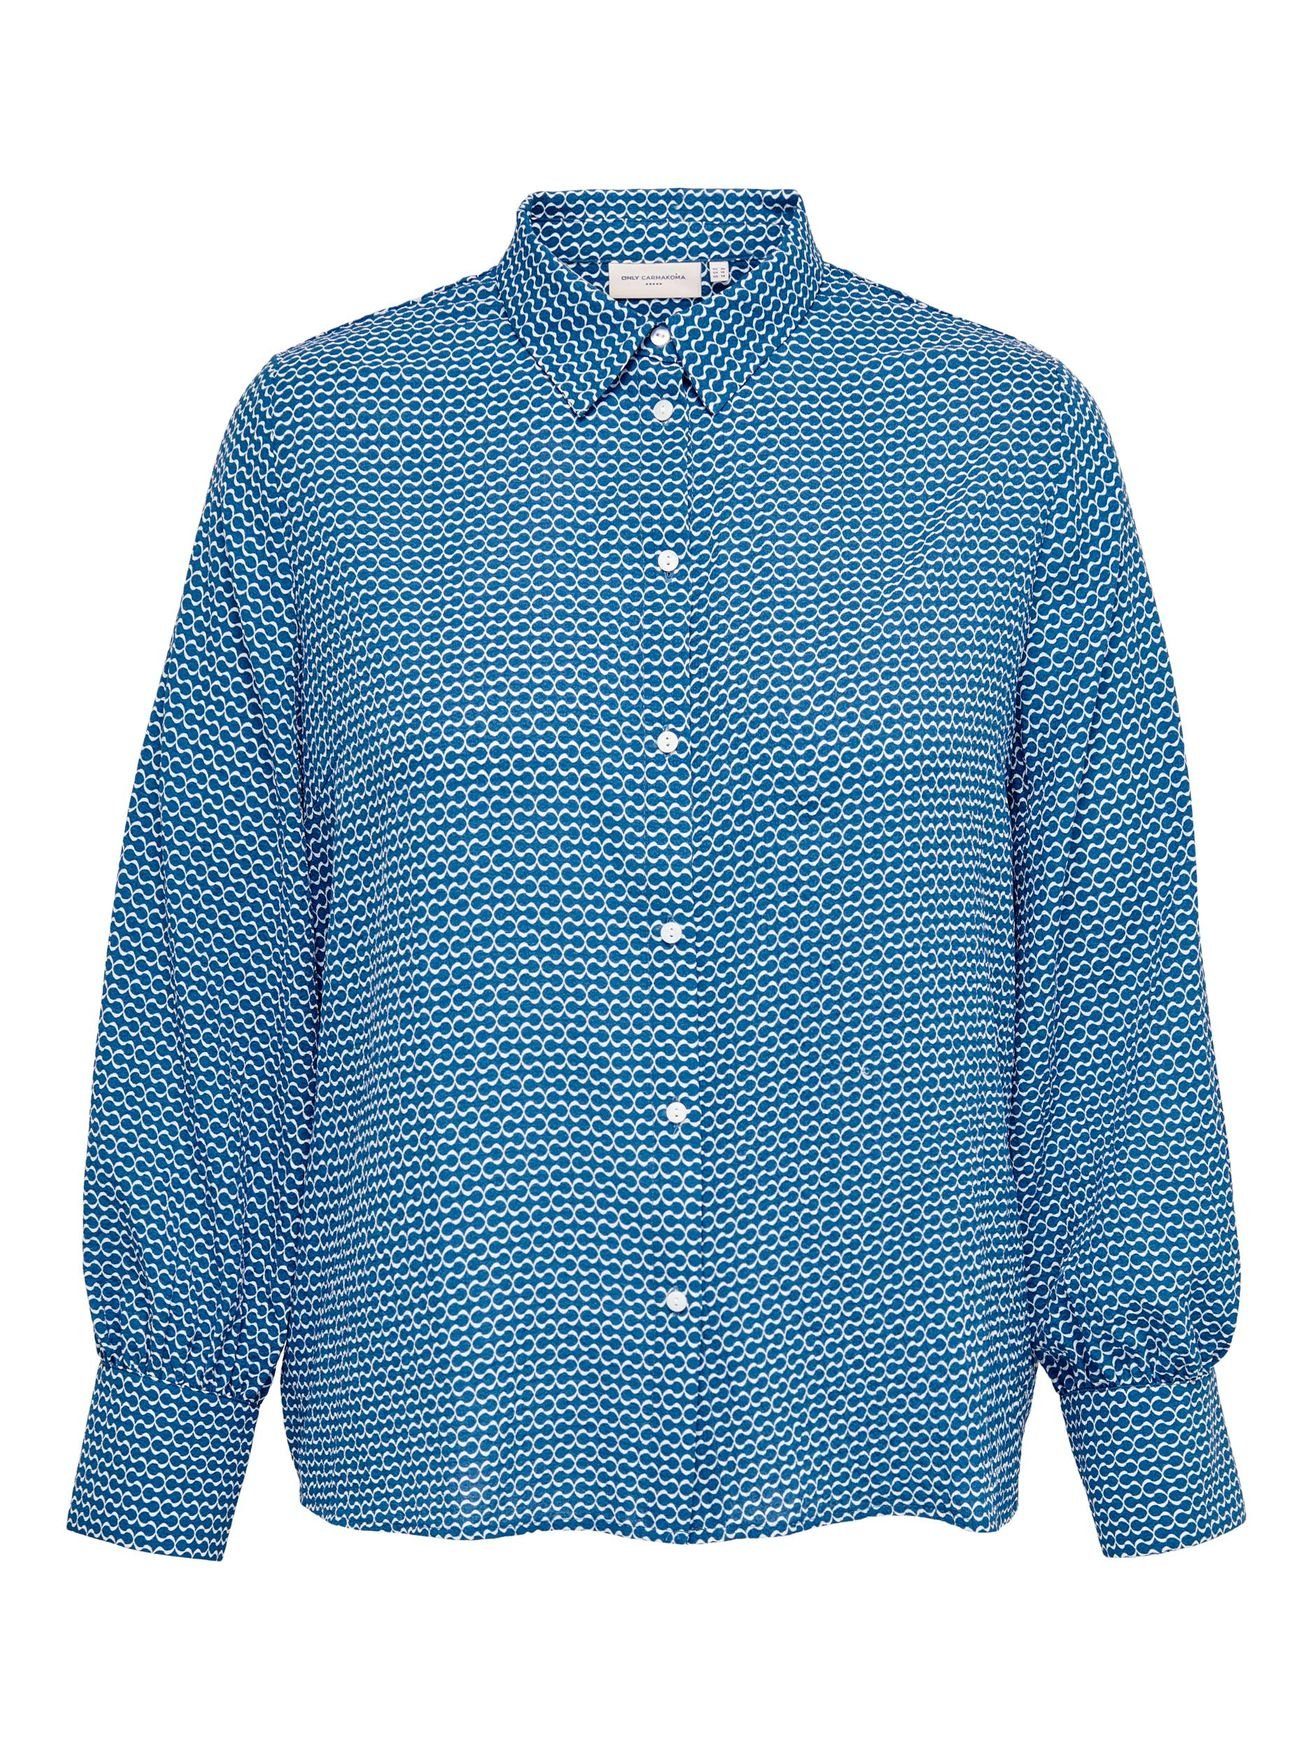 CARELVIRO 4570 Tunika Size Übergrößen Print Plus in ONLY Gemusterte Blusenshirt Hemd Bluse CARMAKOMA Blau